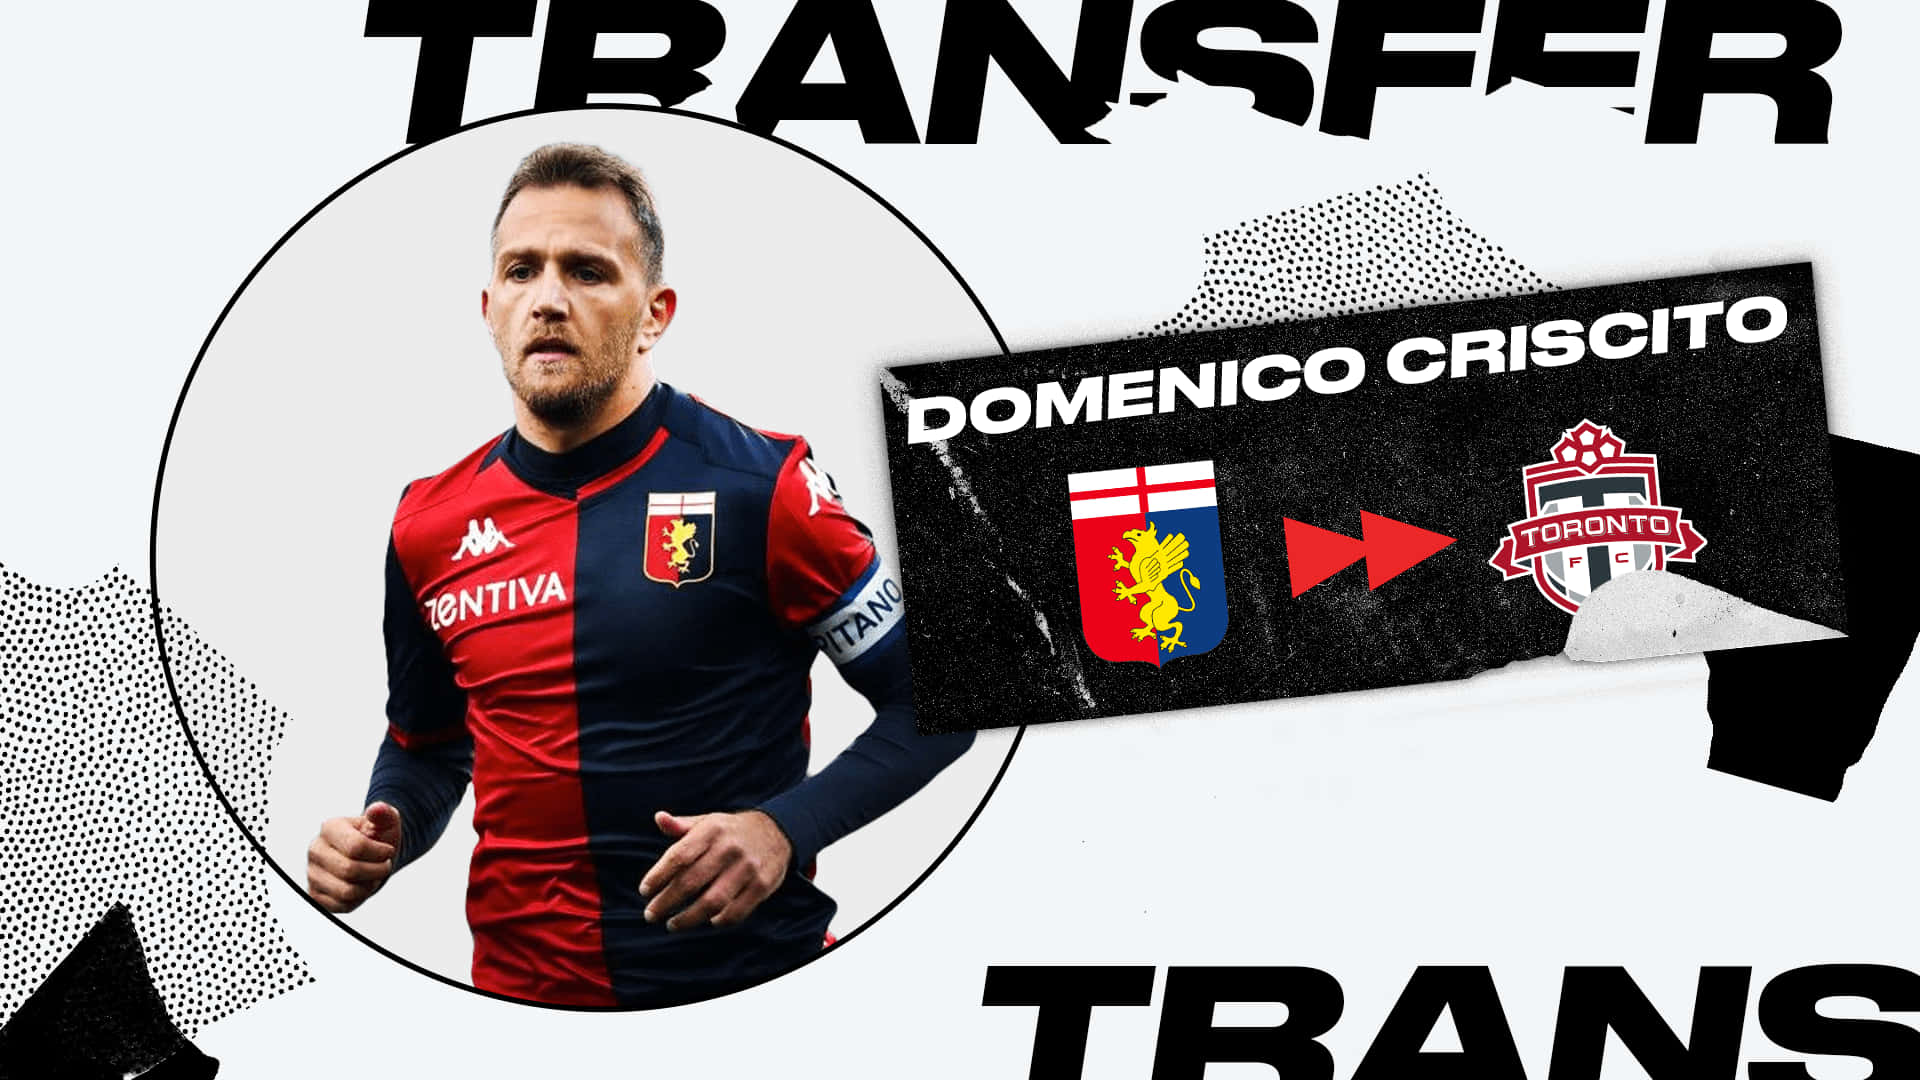 Domenicocriscito (nombre De Un Jugador De Fútbol) Geneo (nombre De Un Equipo De Fútbol) Transfer (traslado O Transferencia) Fondo de pantalla